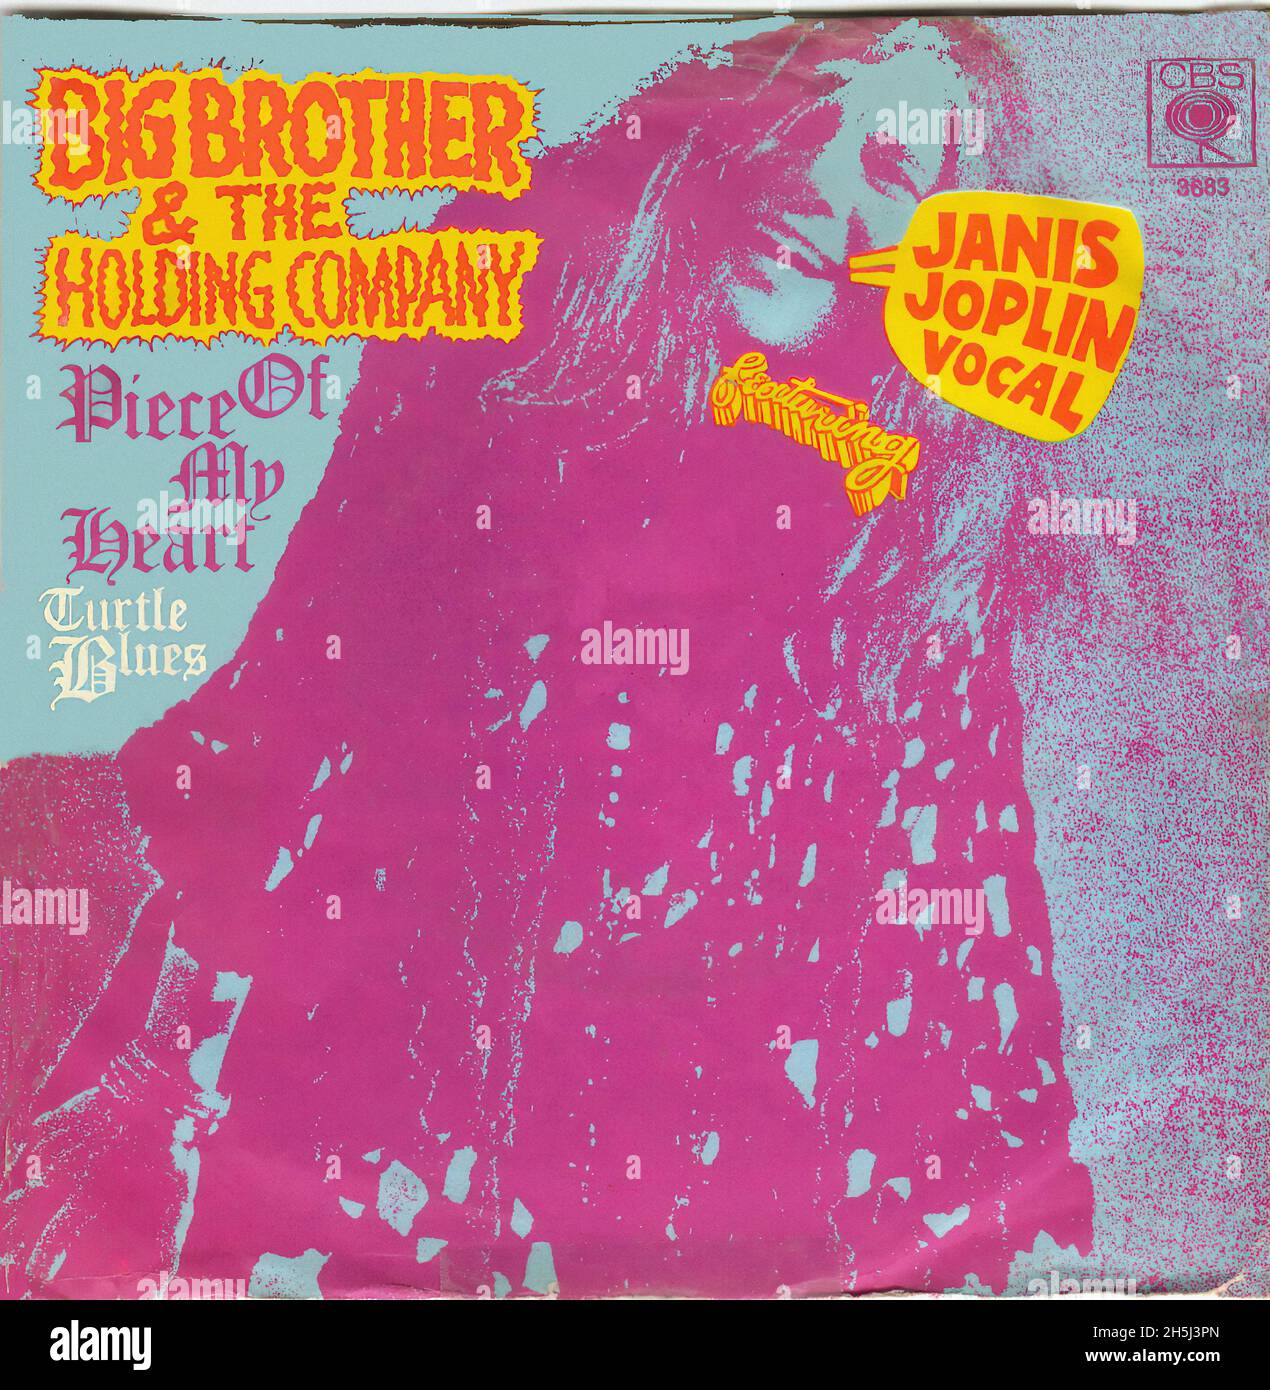 Vintage single record cover - Joplin, Janis-Piece Of My Heart-1969 Stock Photo